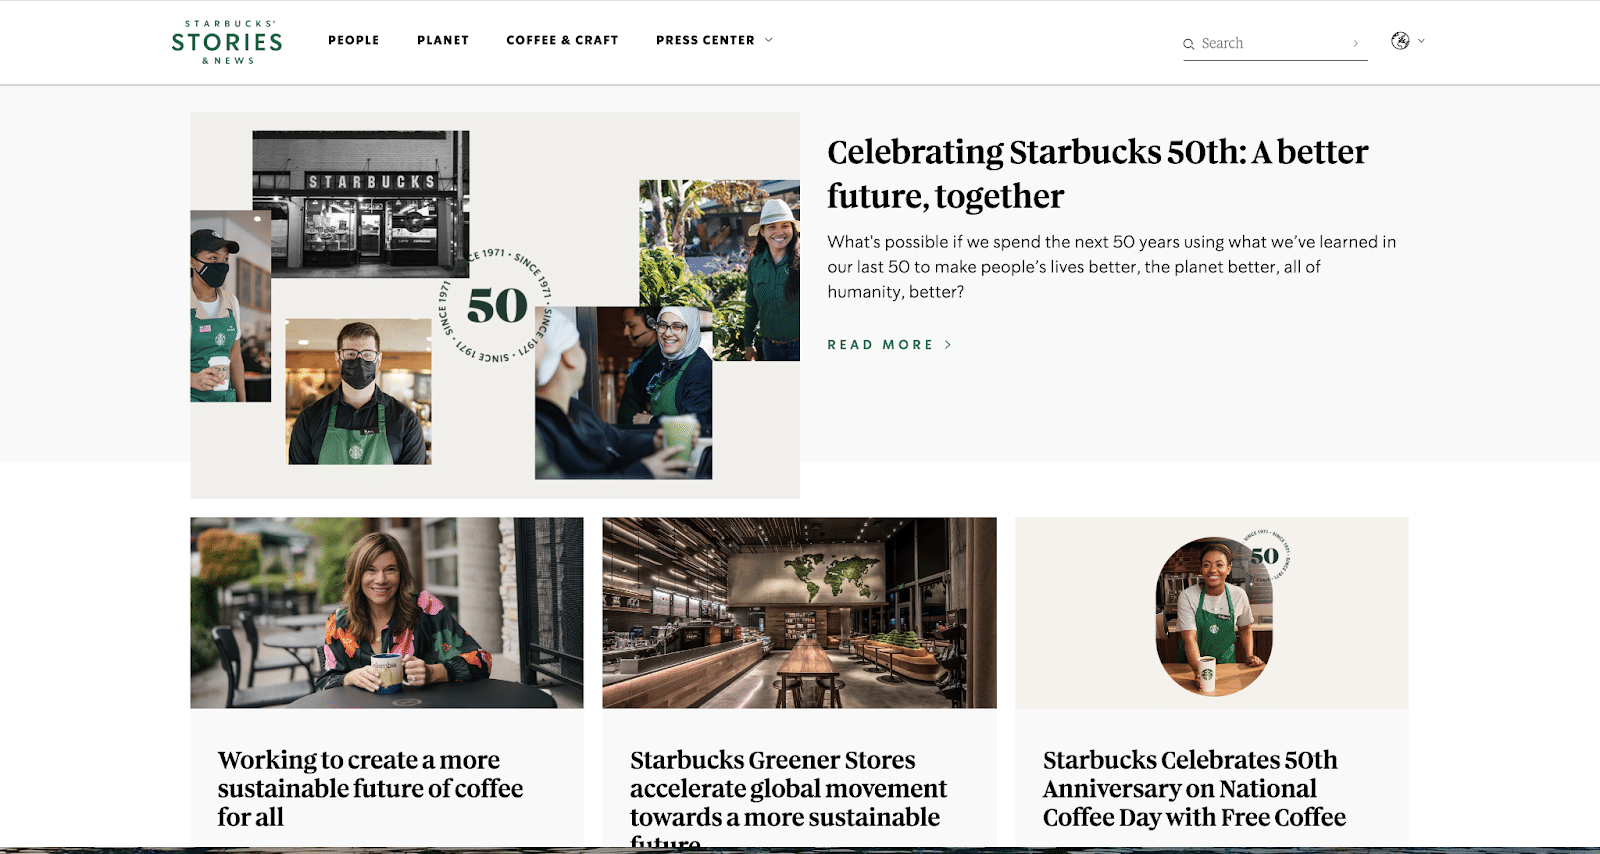 Il blog Starbucks Stories.